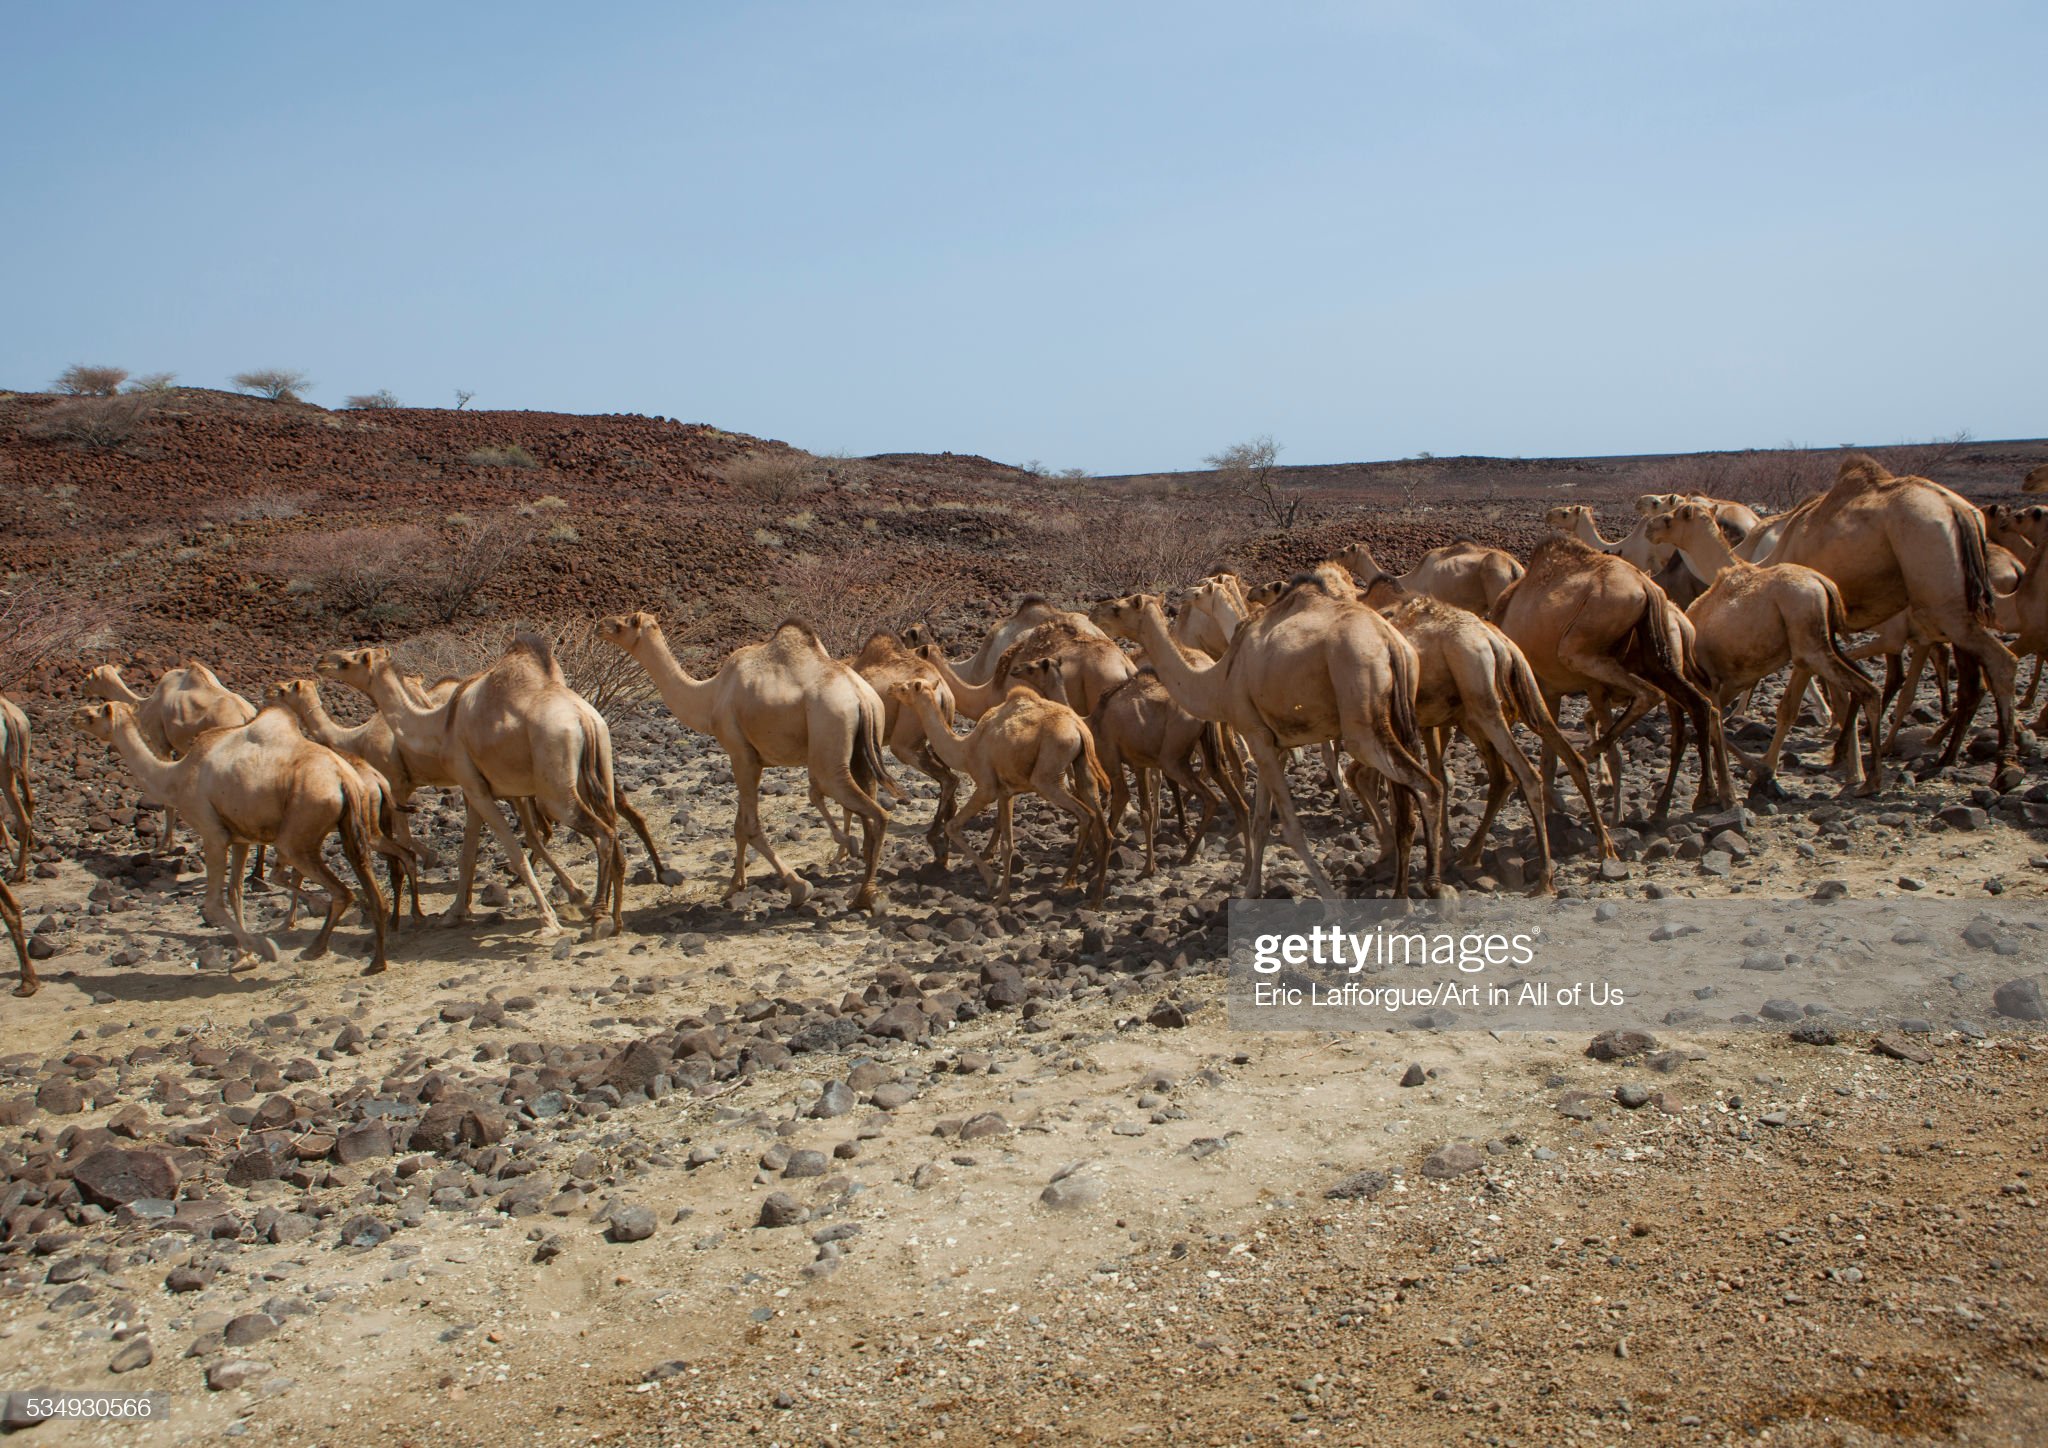 kenya-chalbi-desert-kalacha-camels-in-the-desert-picture-id534930566